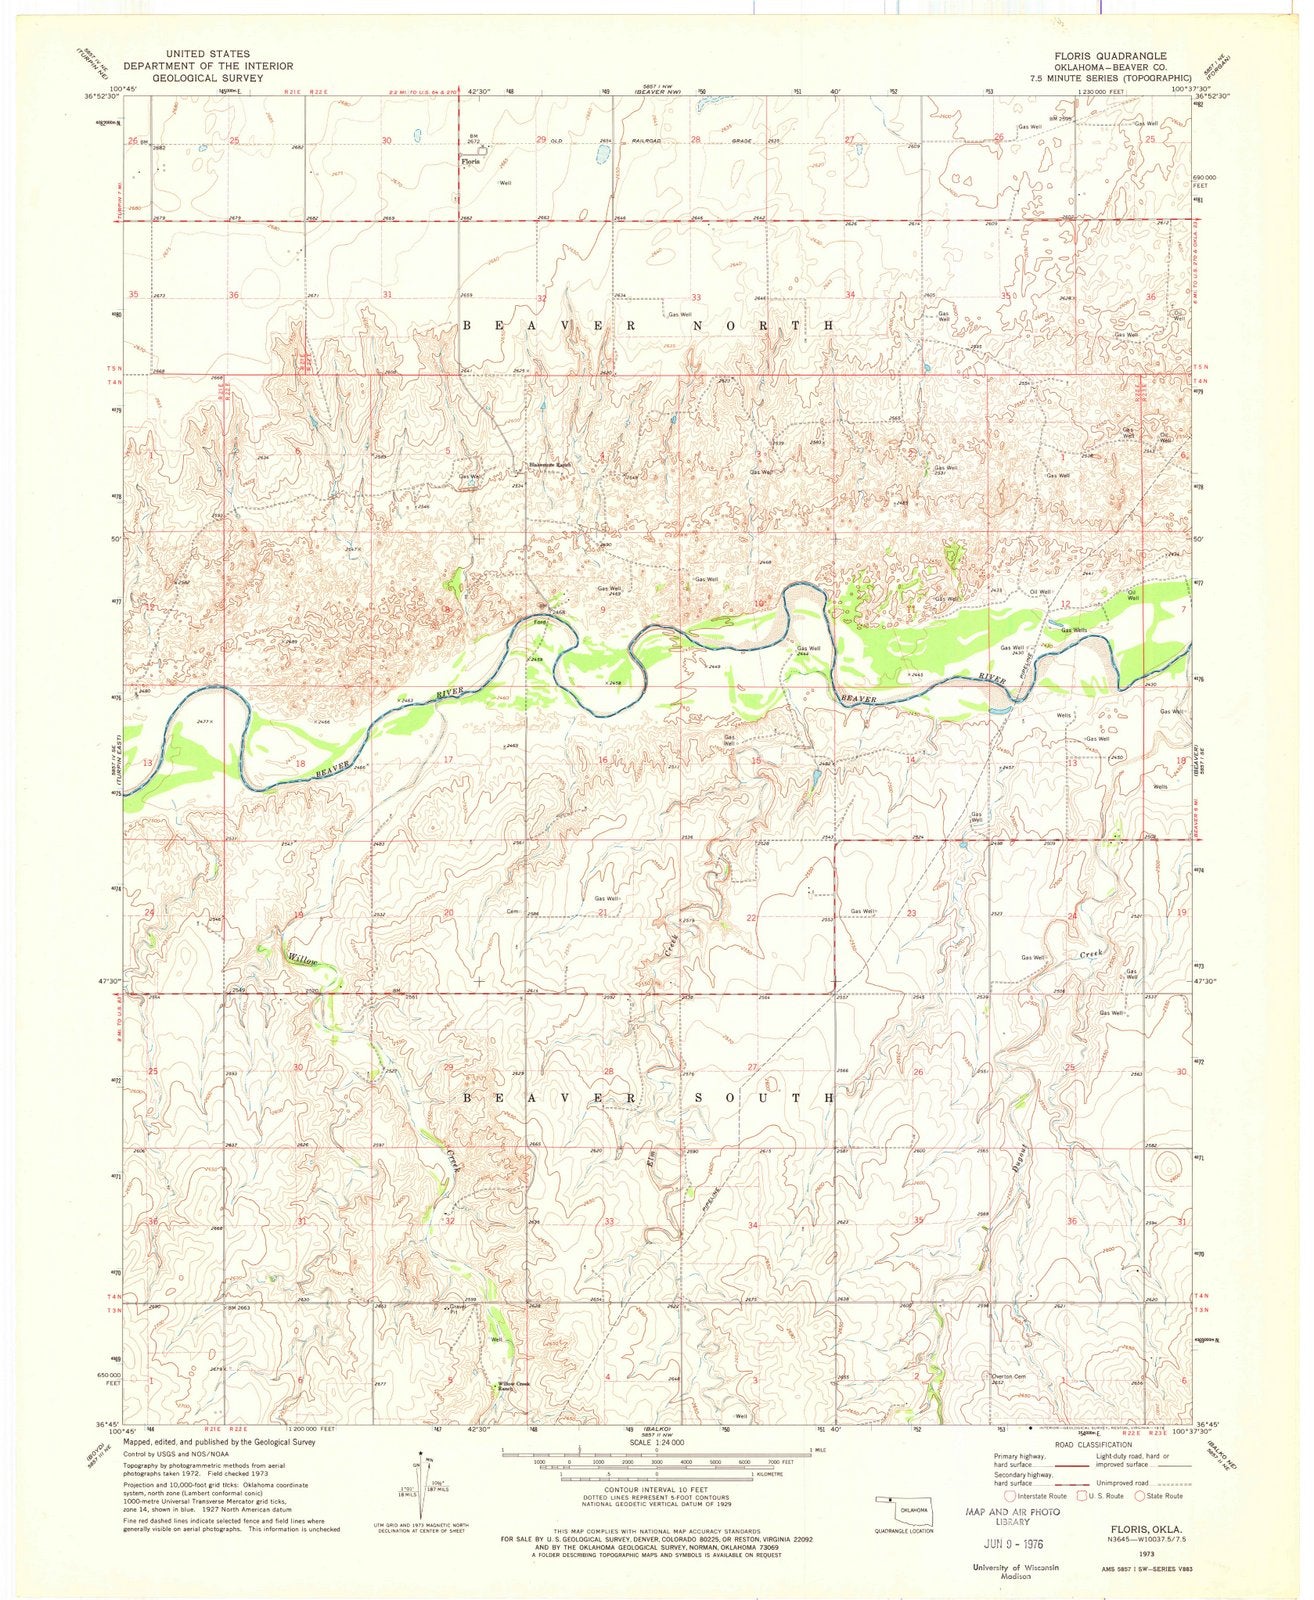 1973 Floris, OK - Oklahoma - USGS Topographic Map